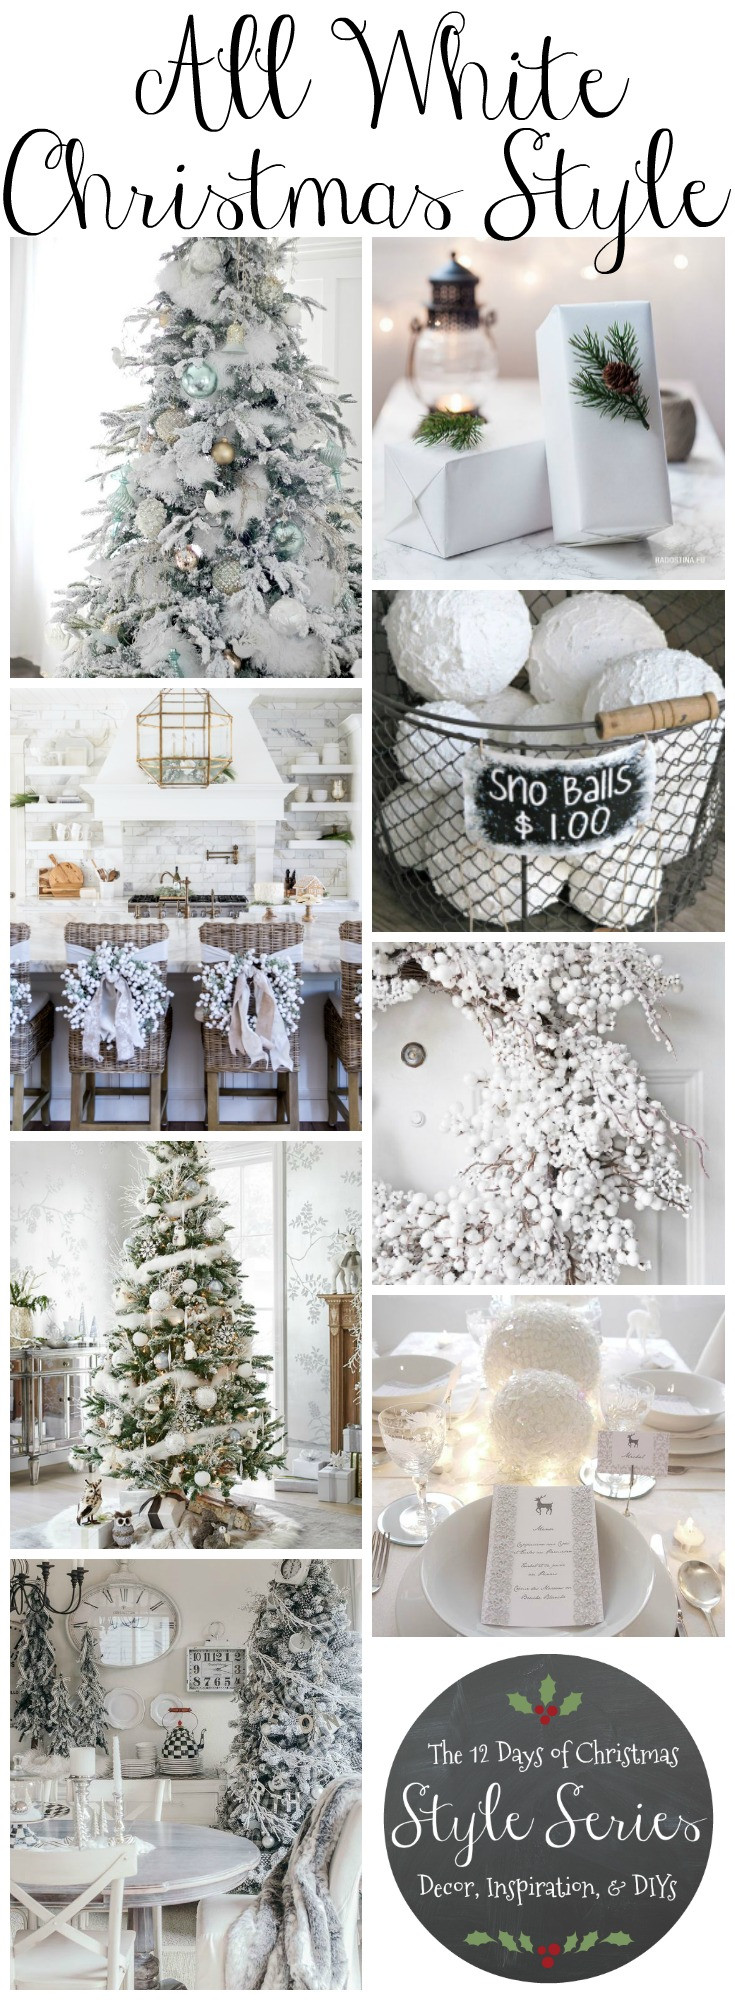 Winter Wonderland Christmas Decor
 All White Christmas Style Series The Happy Housie